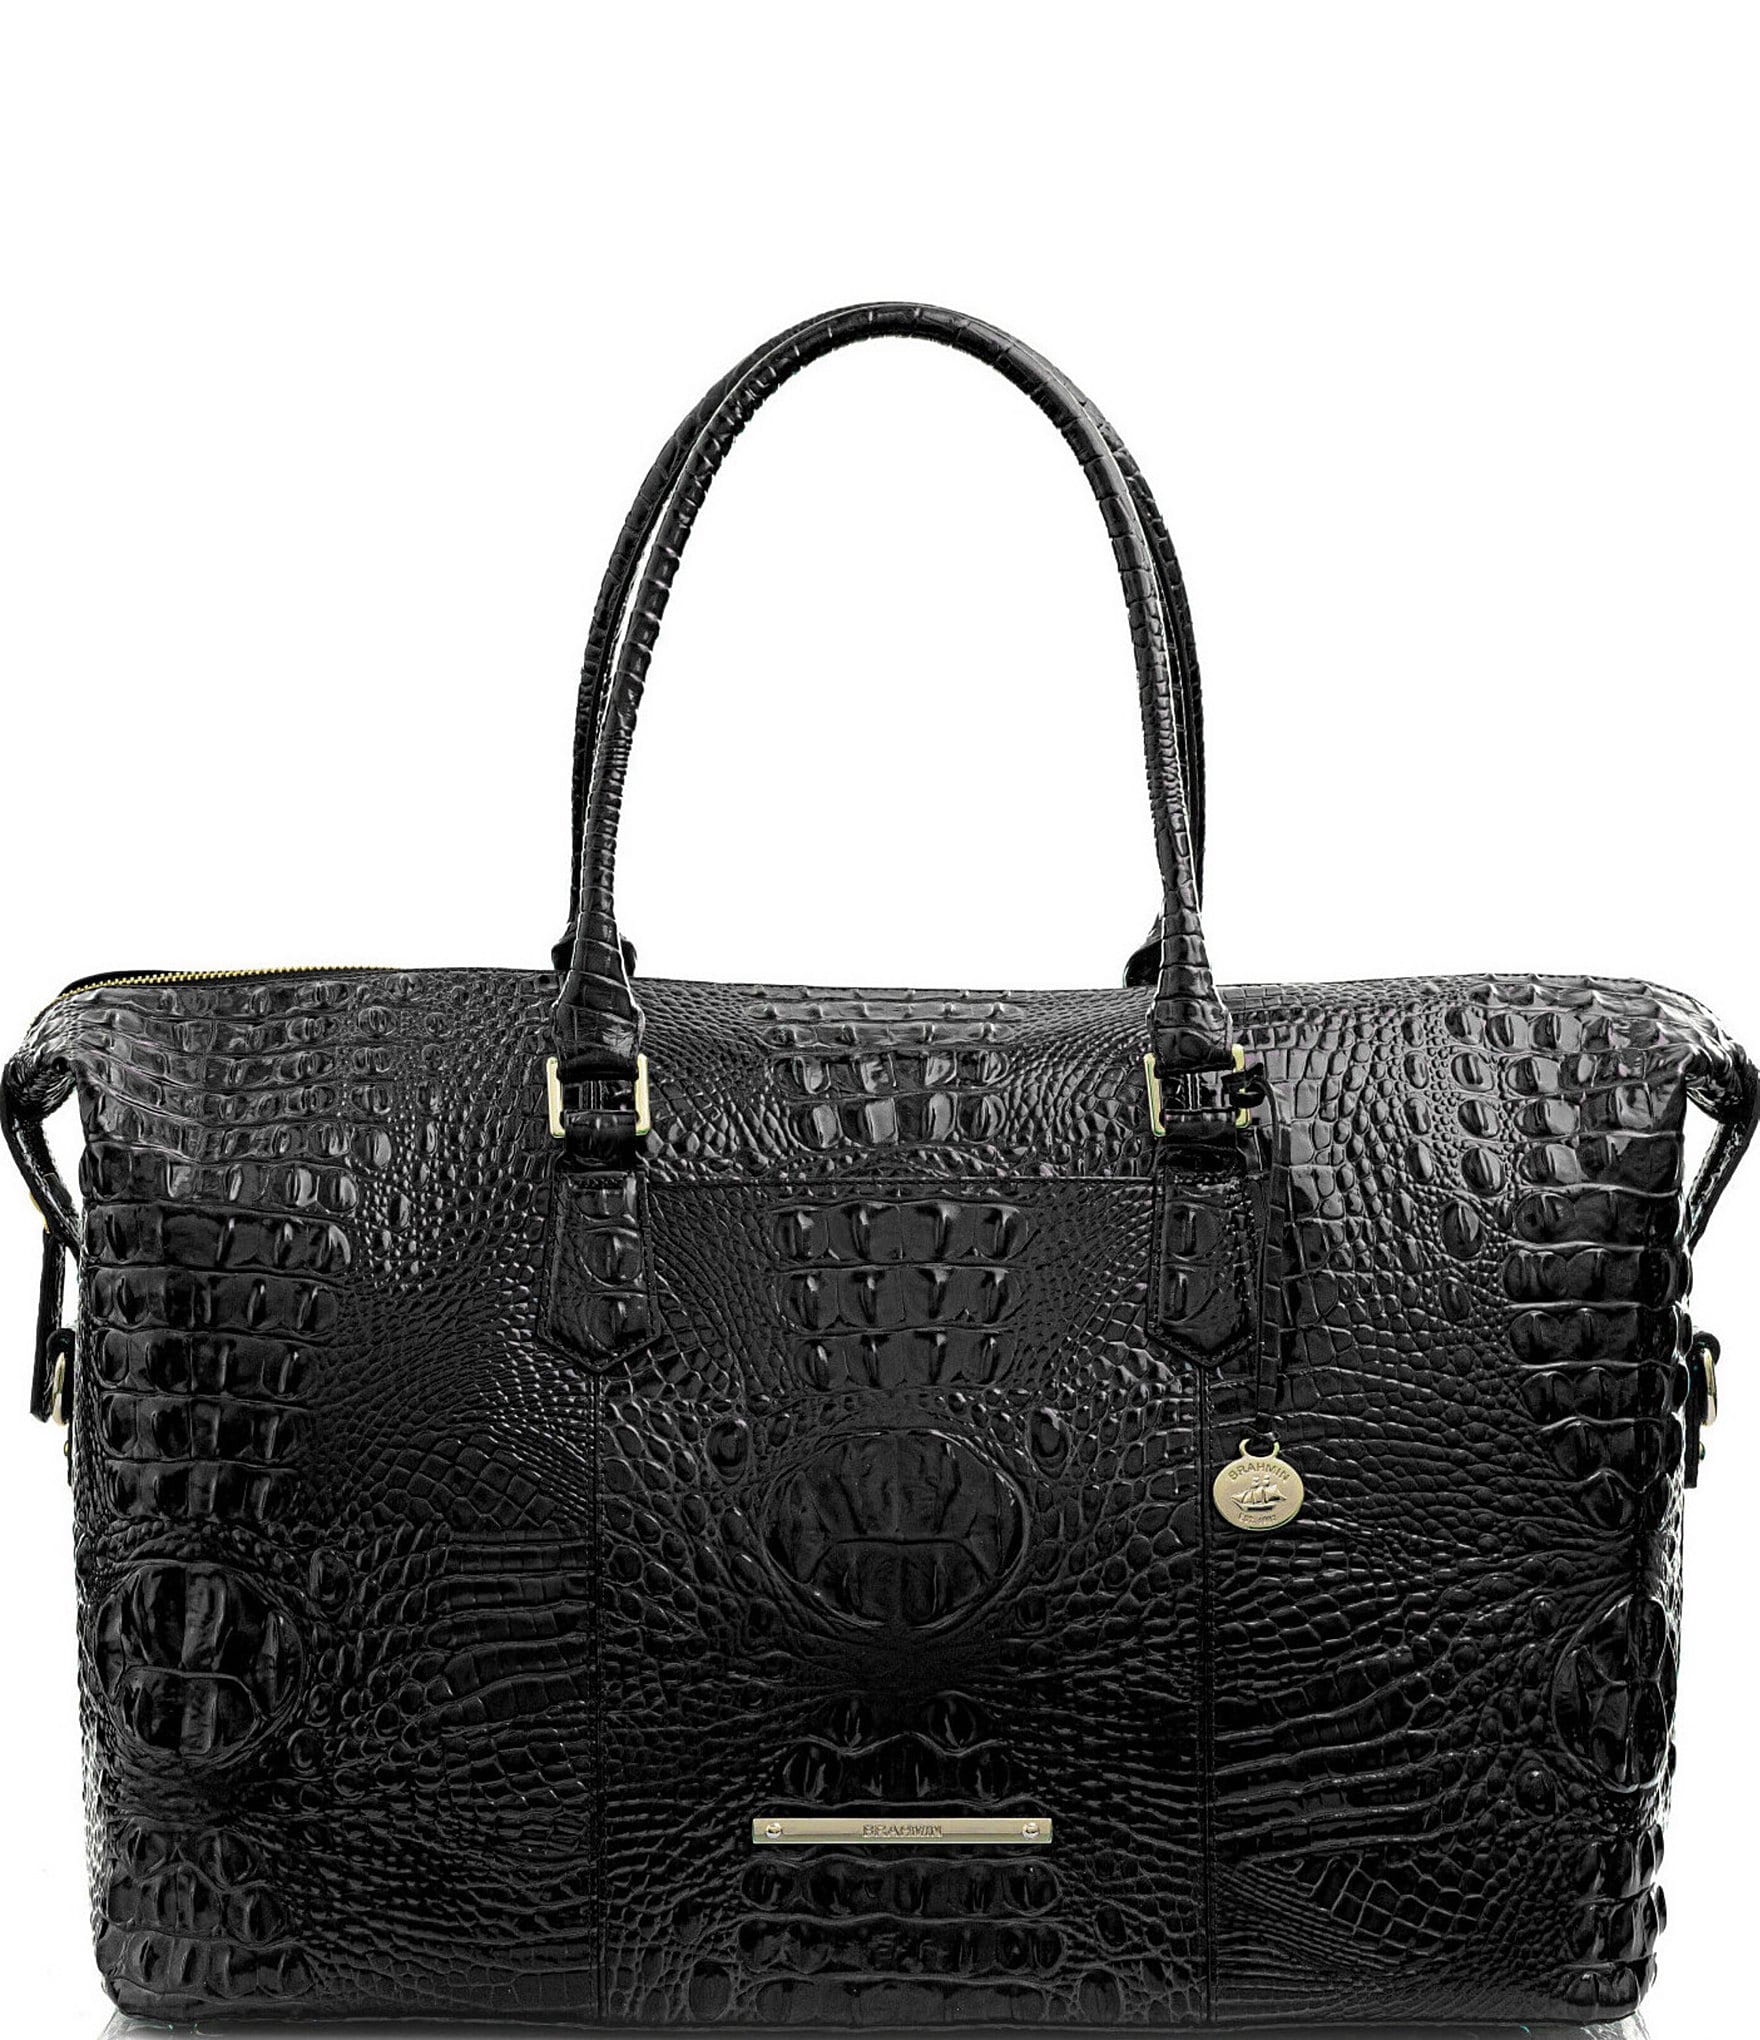 HOLLIS x Dillard's Champagne Leopard Vegan Leather Lux Weekender Bag